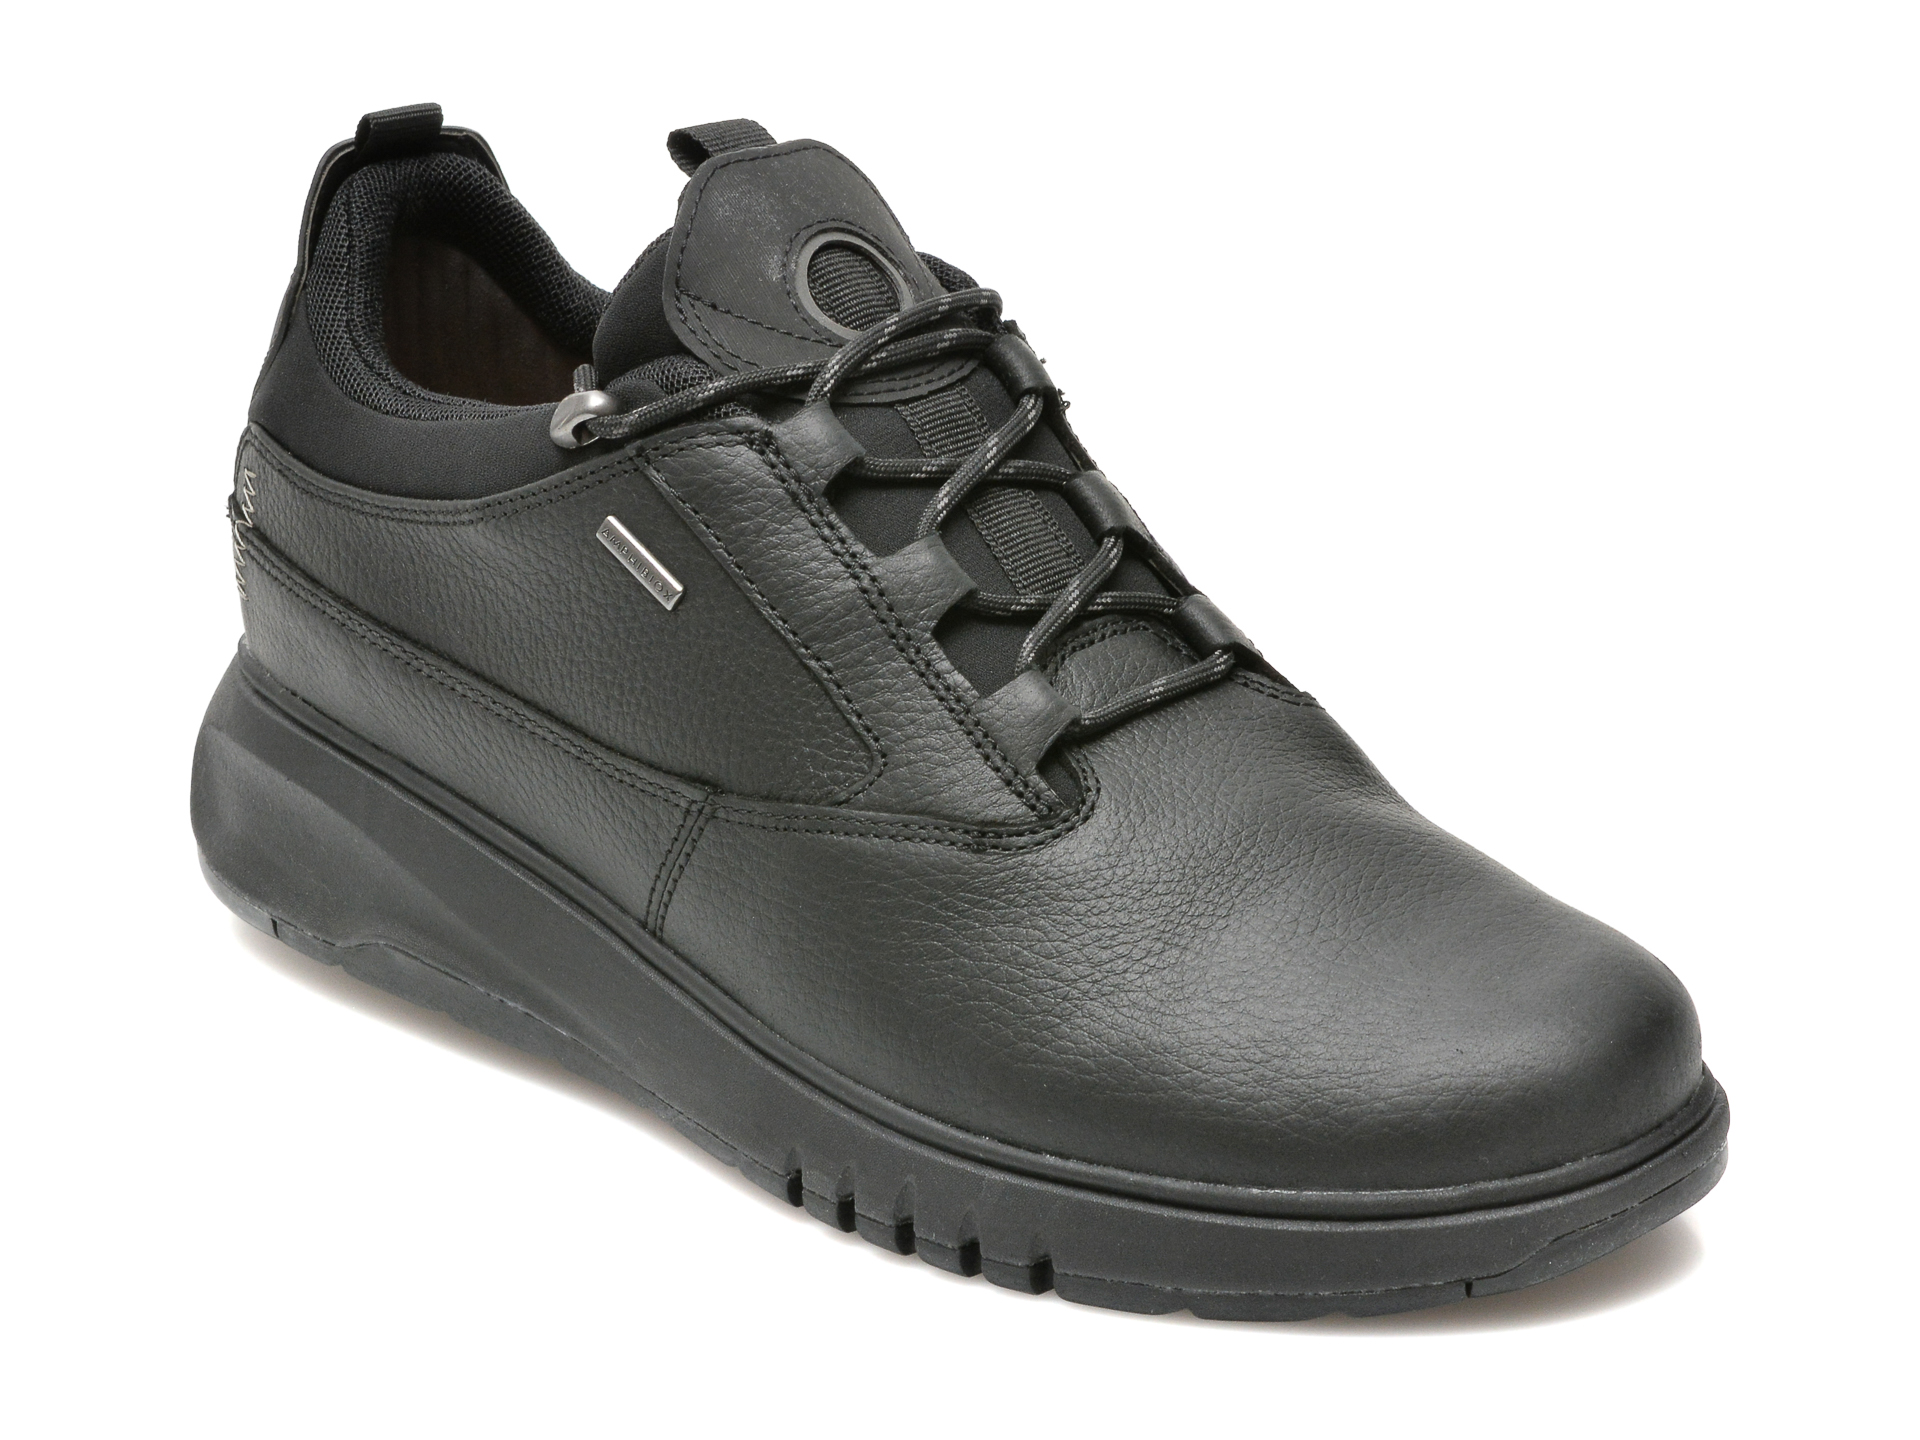 Pantofi GEOX negri, U16APA, din material textil si piele naturala Geox